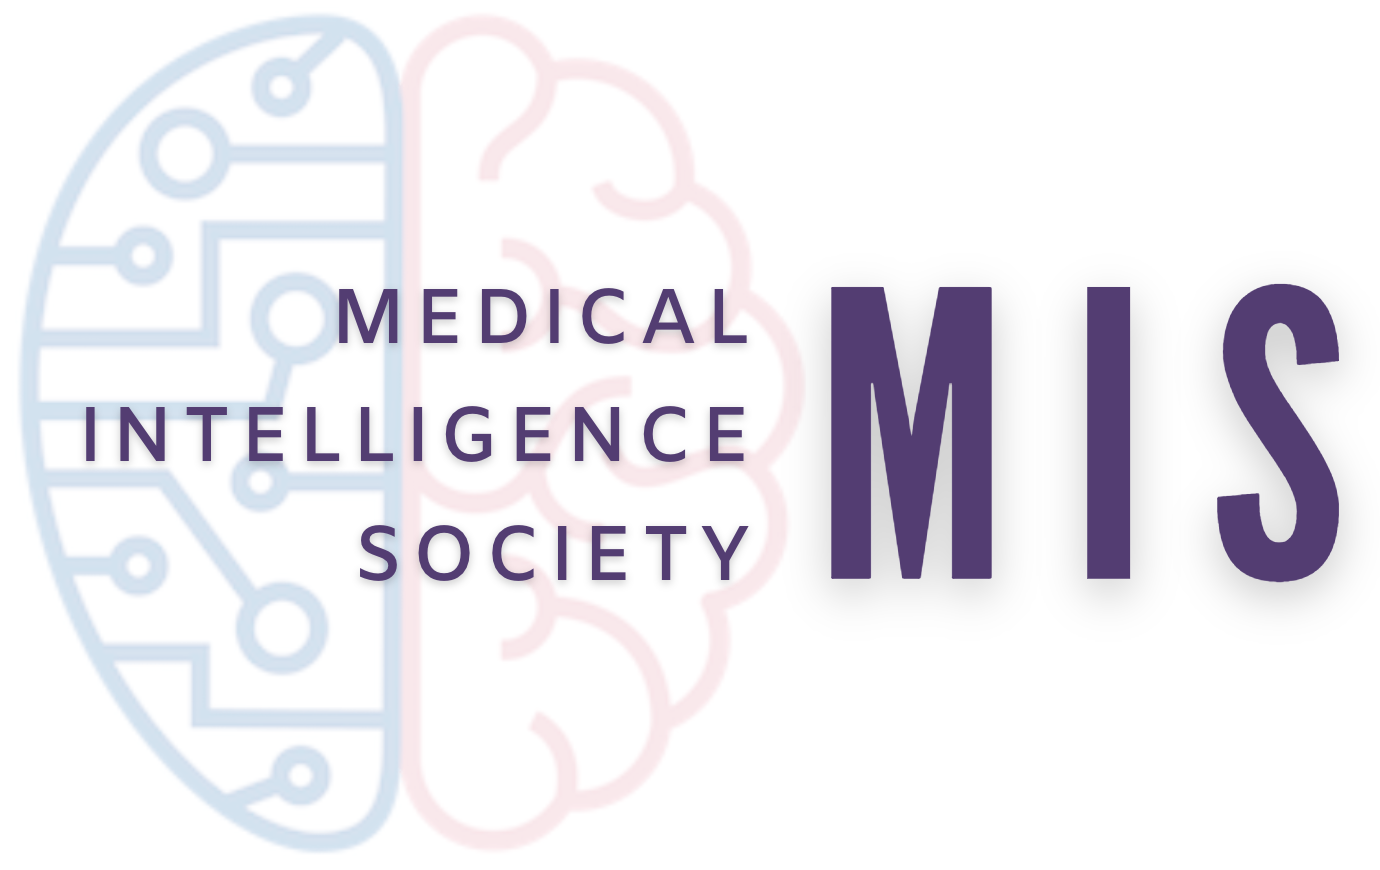 Medical Intelligence Society MIS